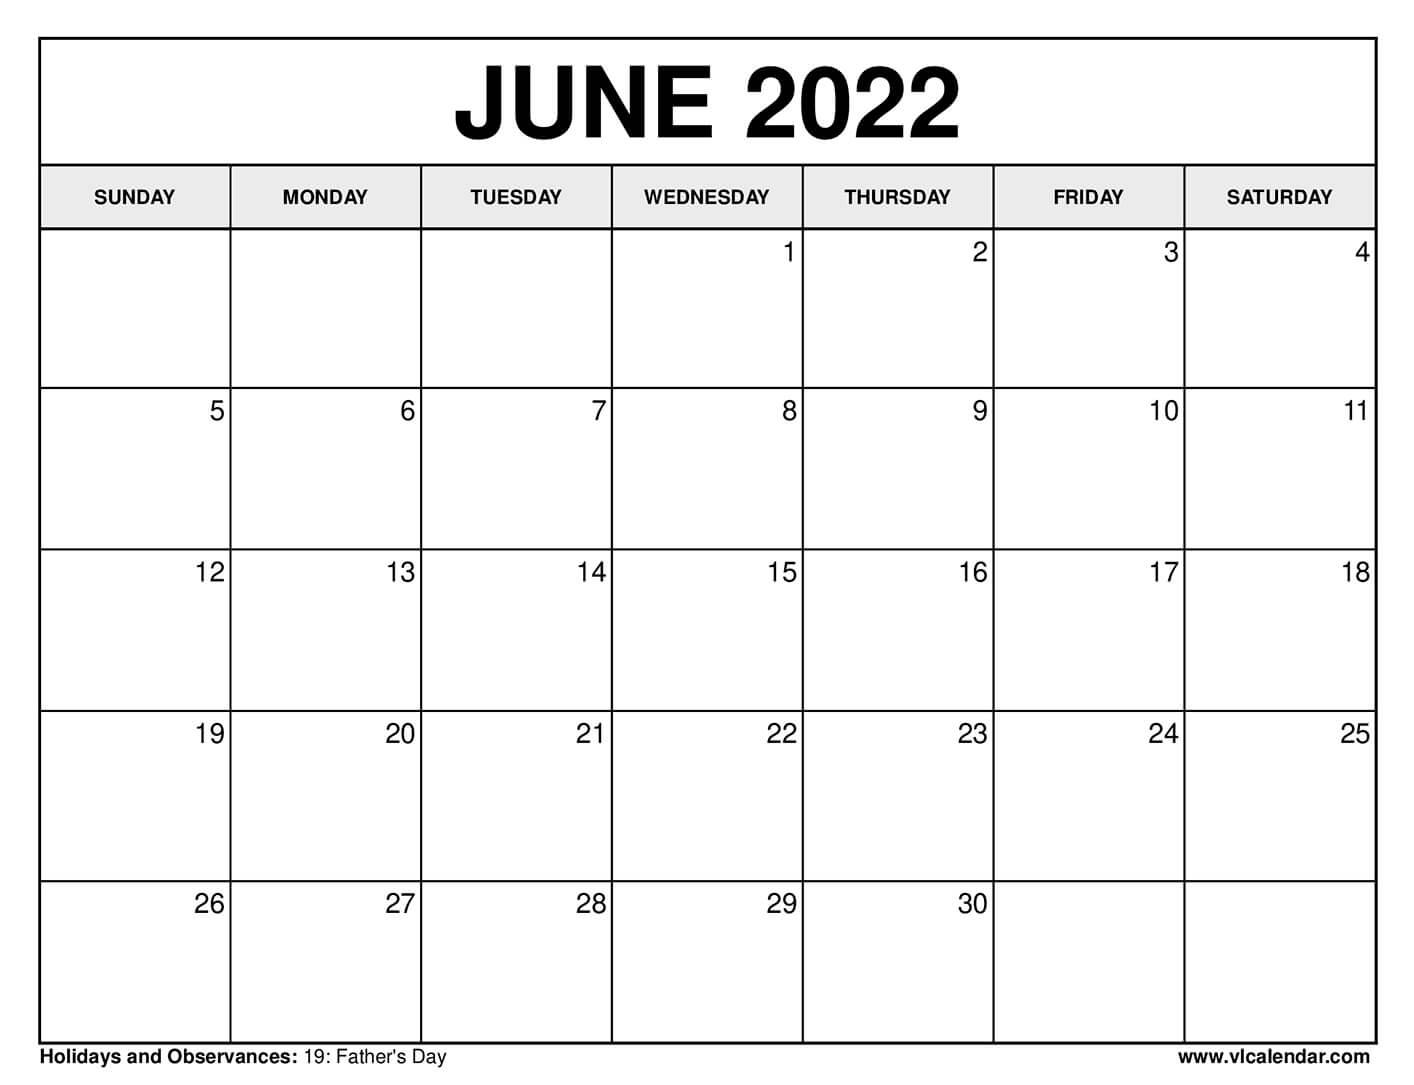 June Calendar 2022 With Holidays Printable June 2022 Calendar Templates With Holidays - Vl Calendar